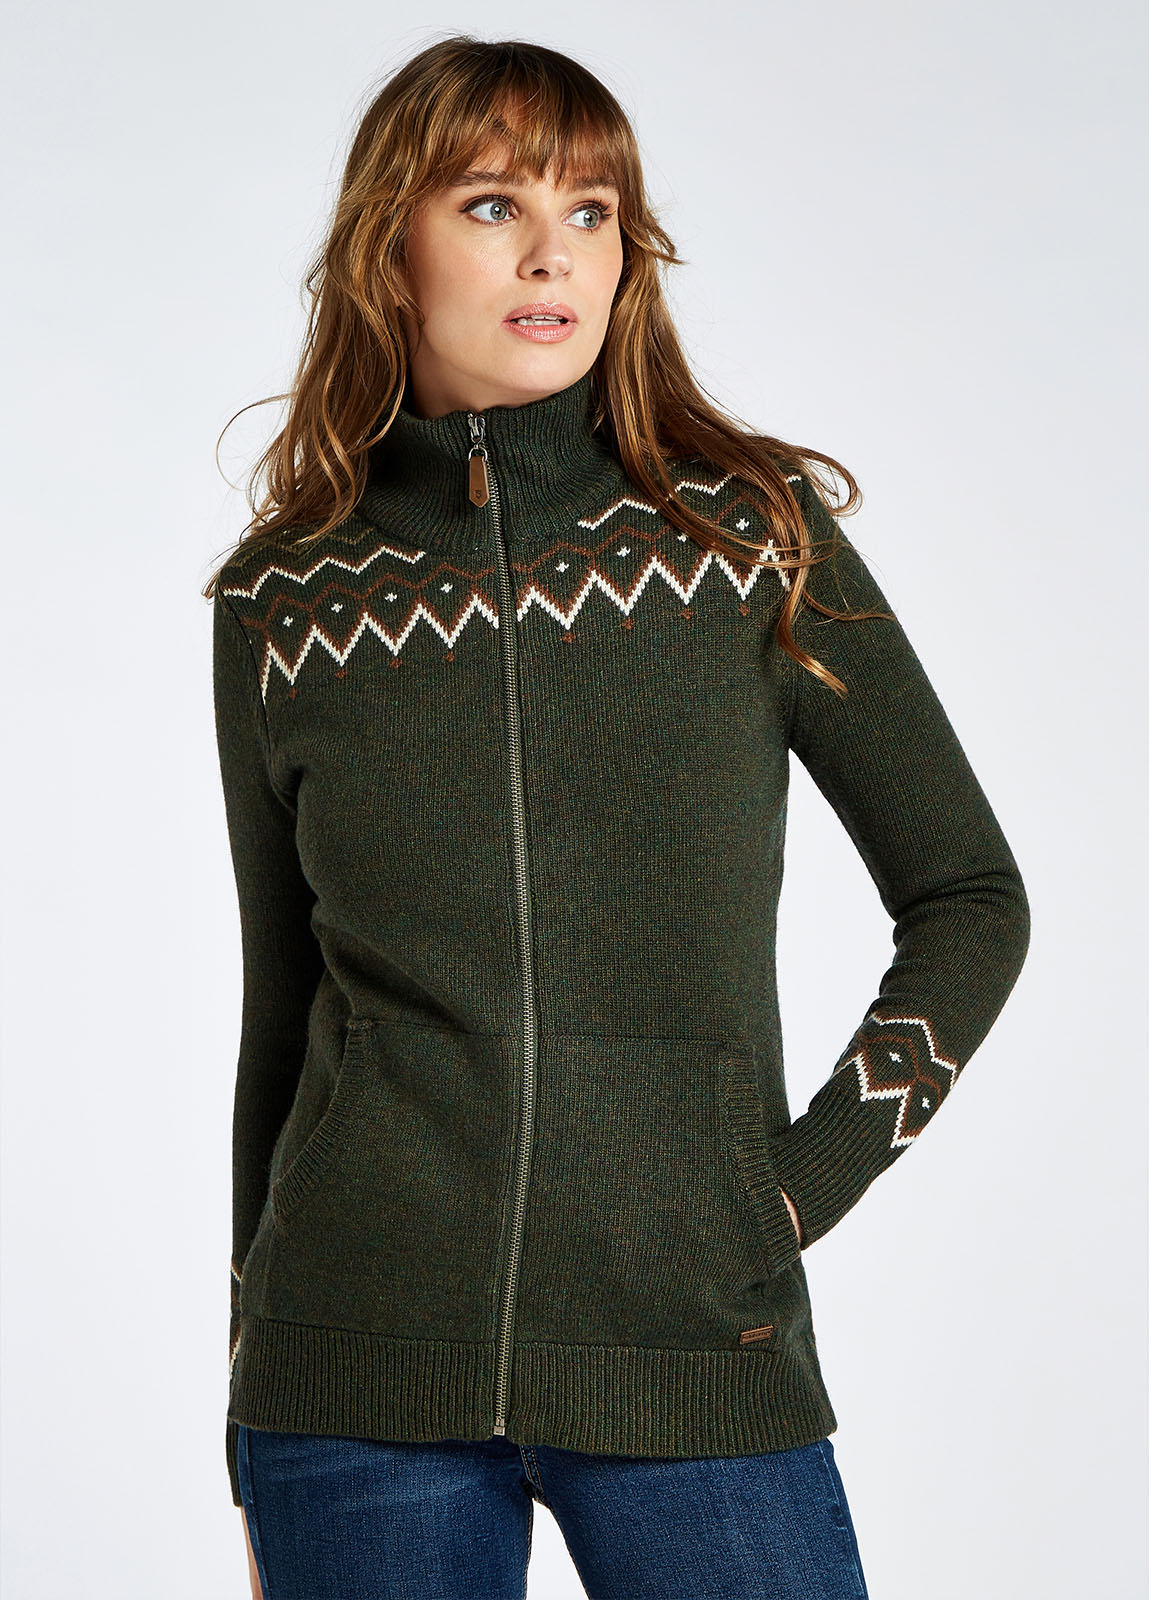 Balbriggan Full Zip Sweater - Olive